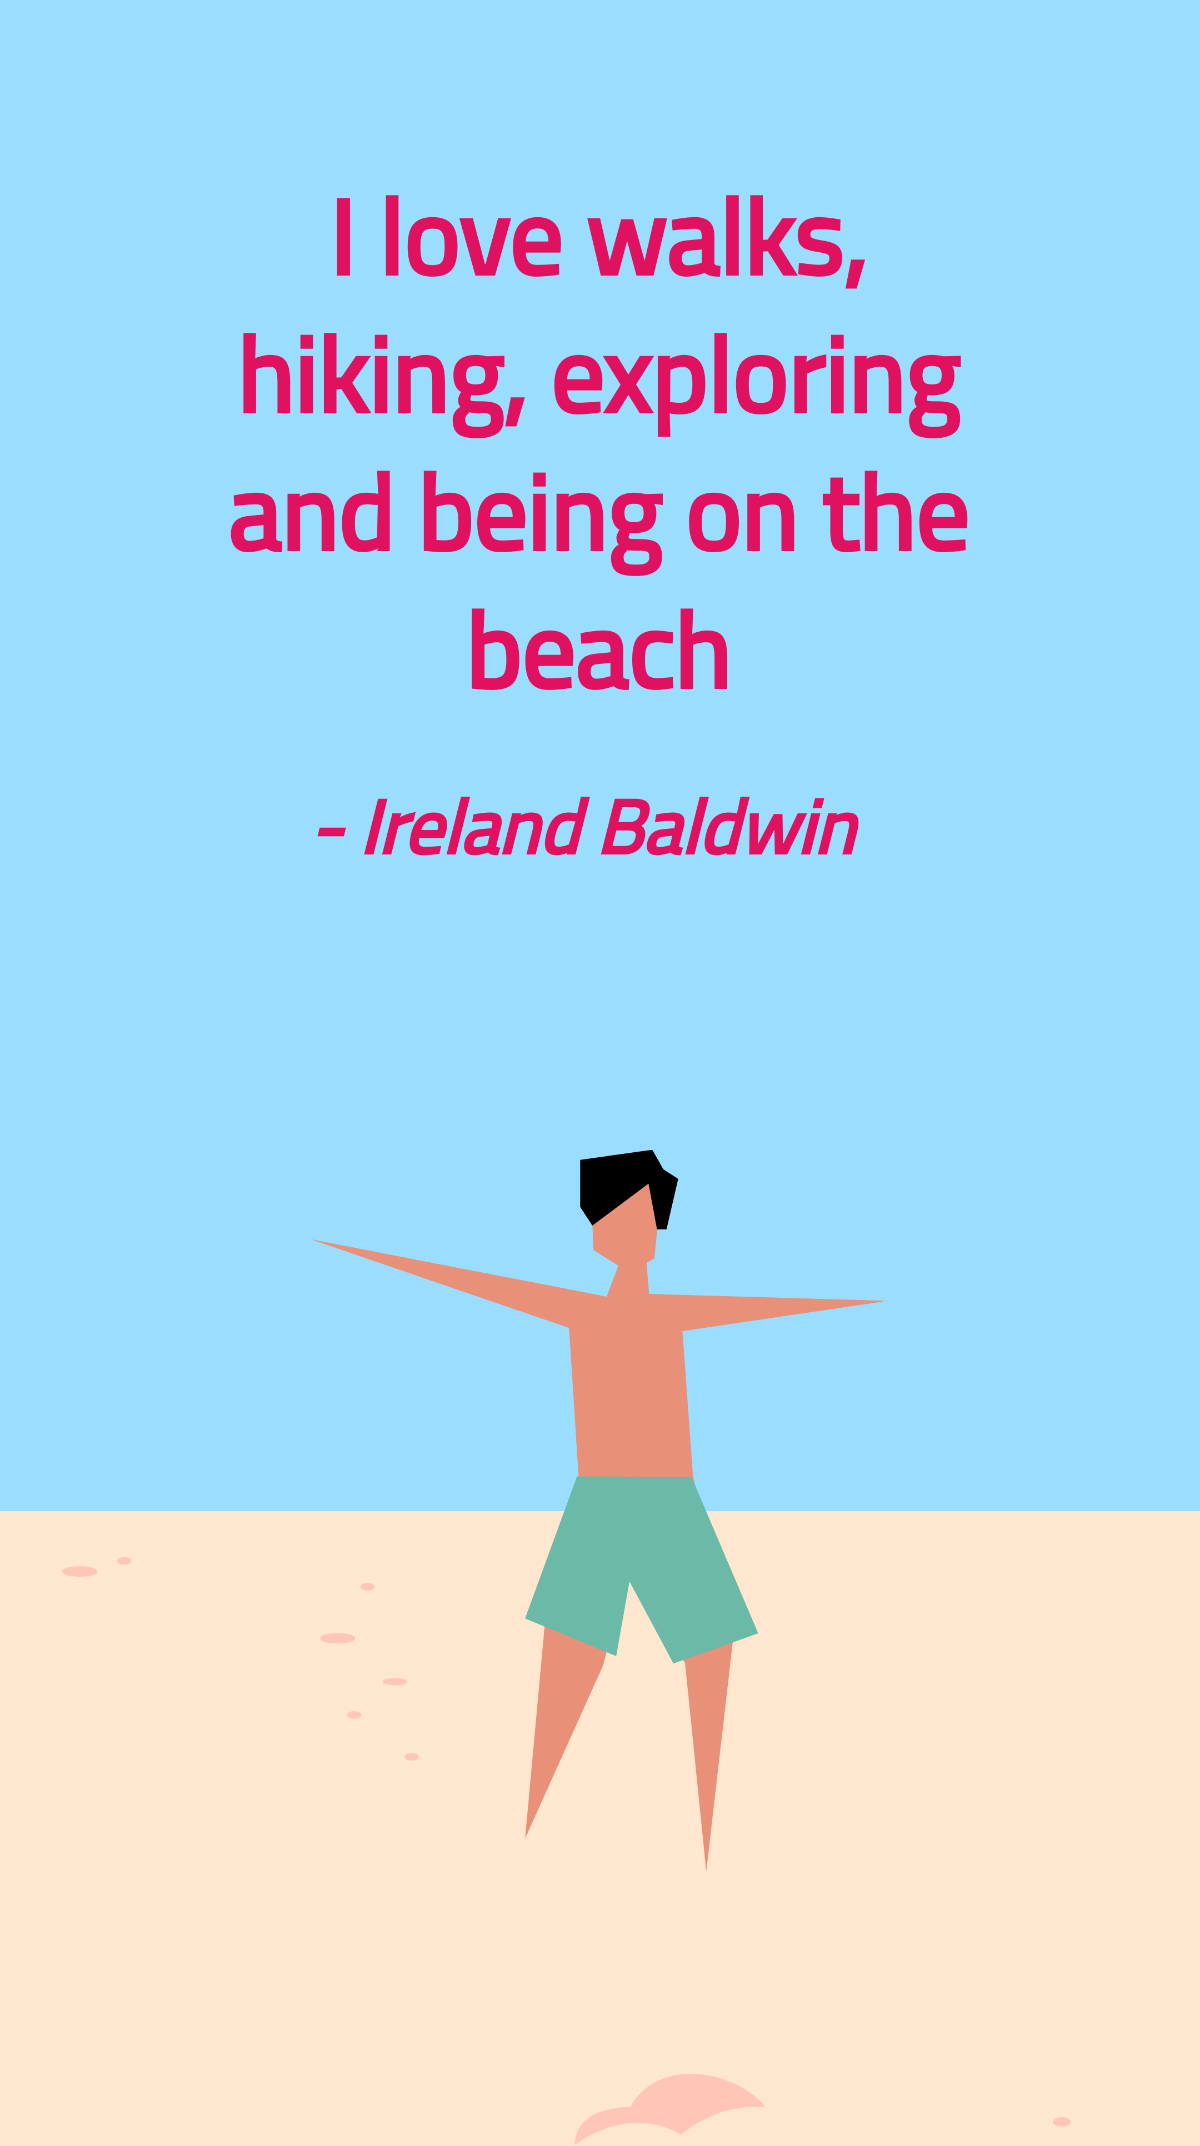 Ireland Baldwin - I love walks, hiking, exploring and being on the beach